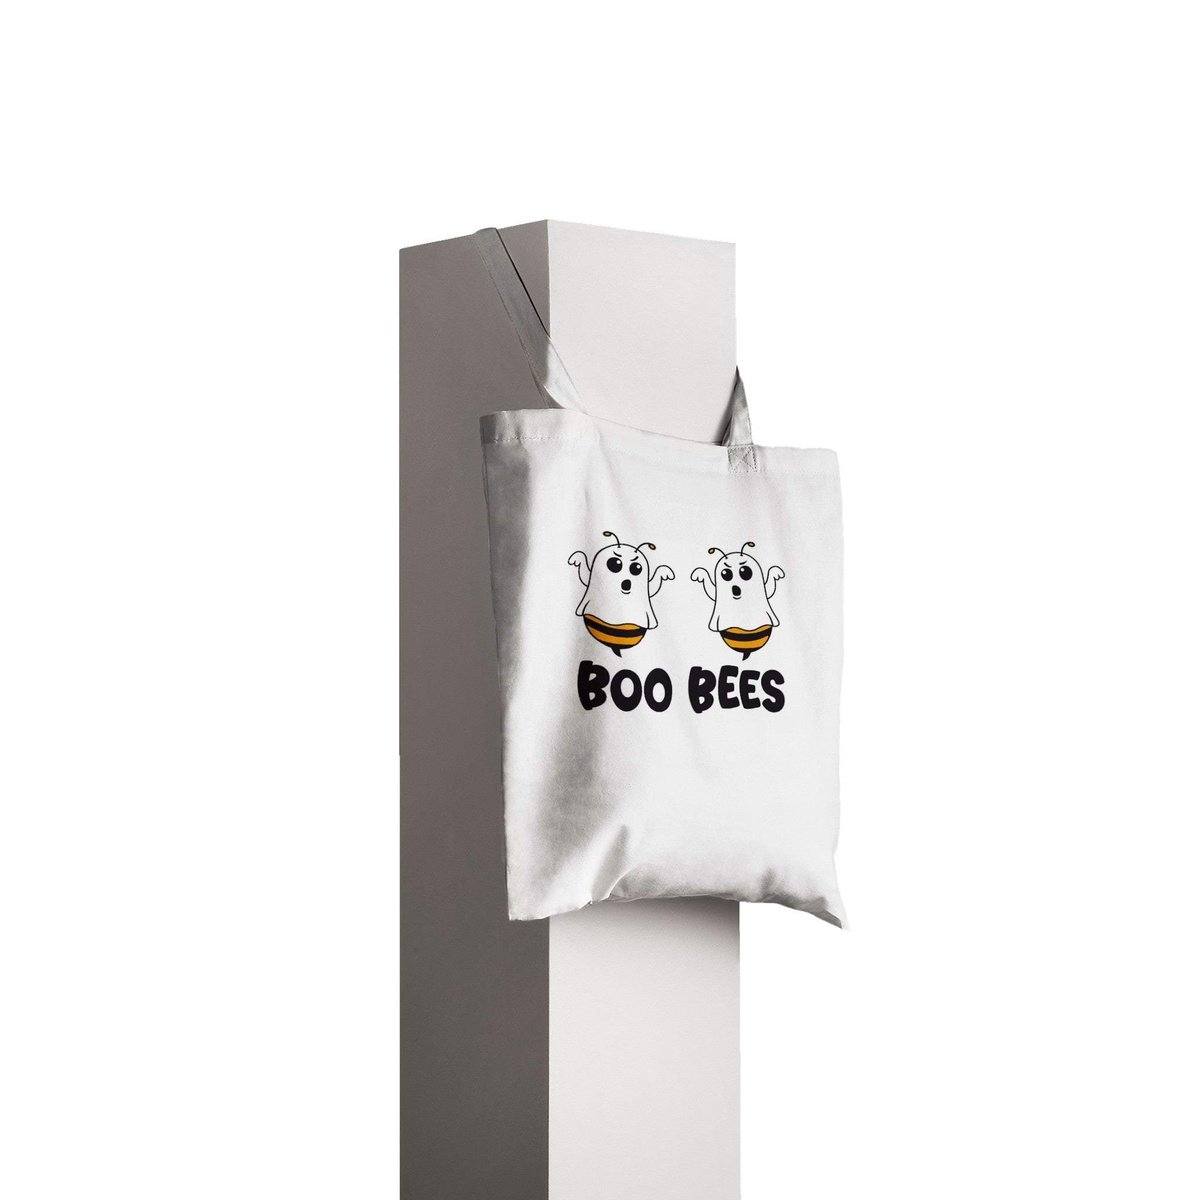 Boo Bees Tote Bag - Classic Tote Bag Australia Online Color